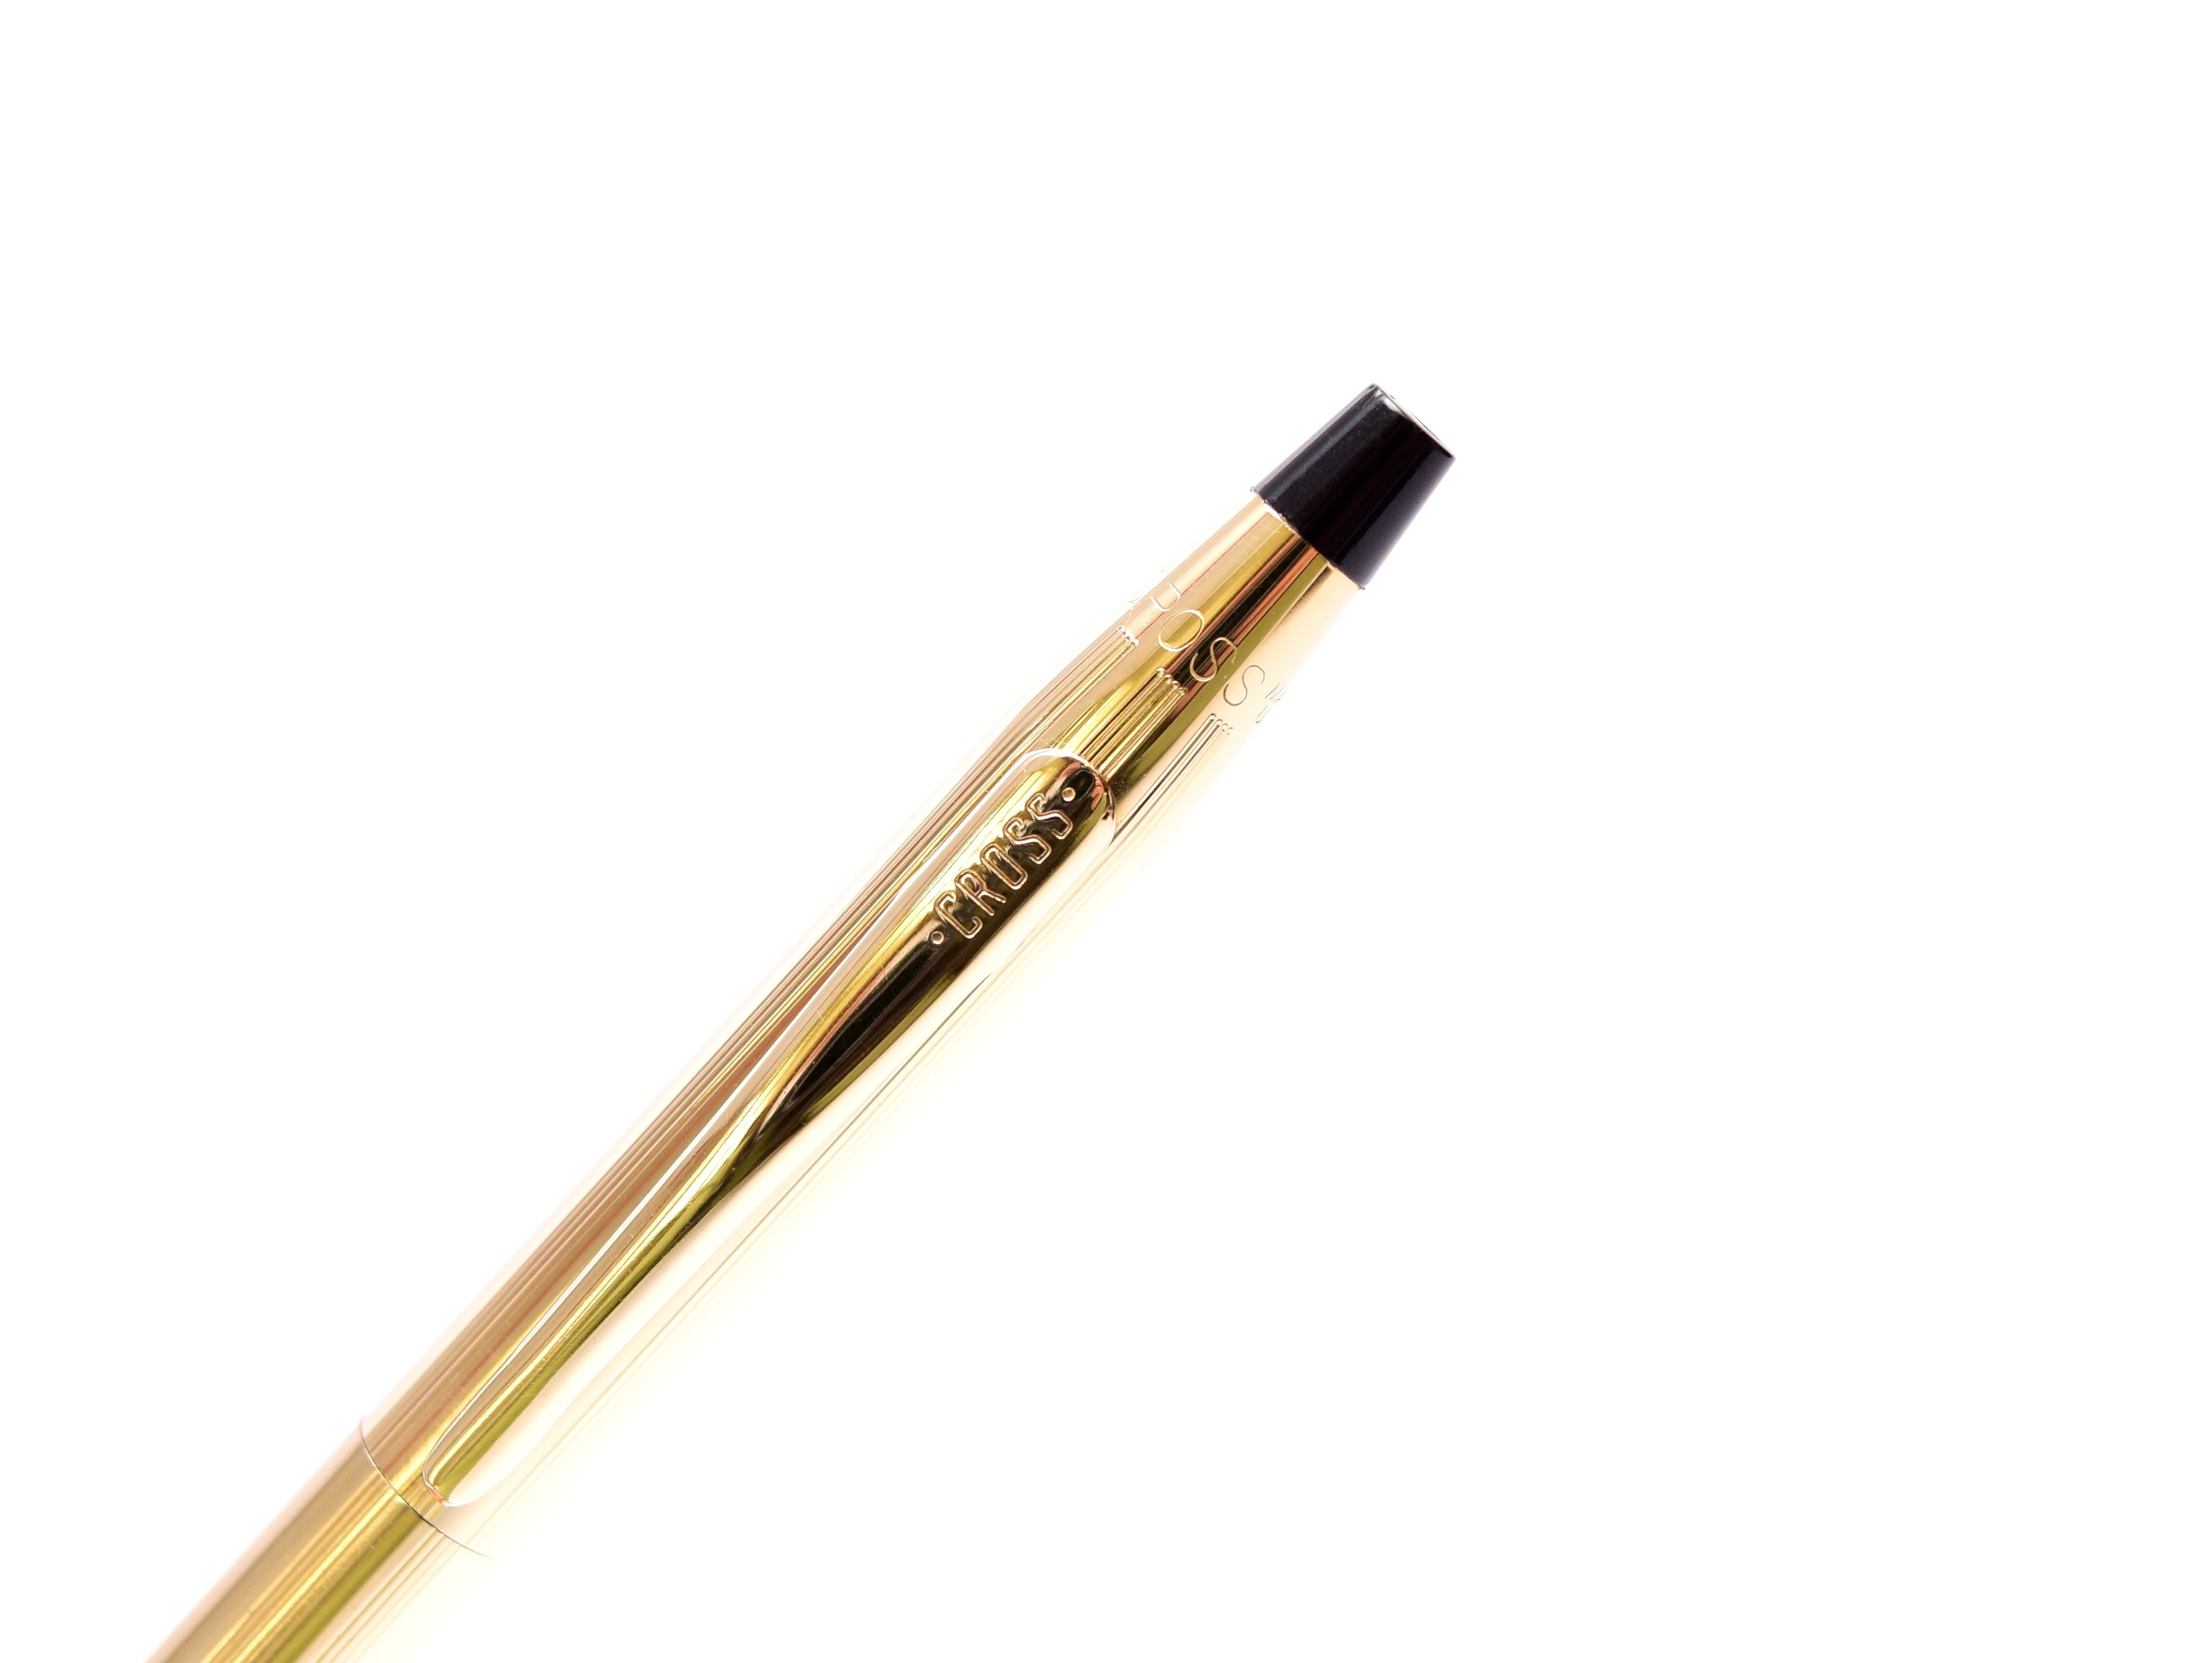 Cross Desk pen 1/20 10kt gold filled pen U.S.A 